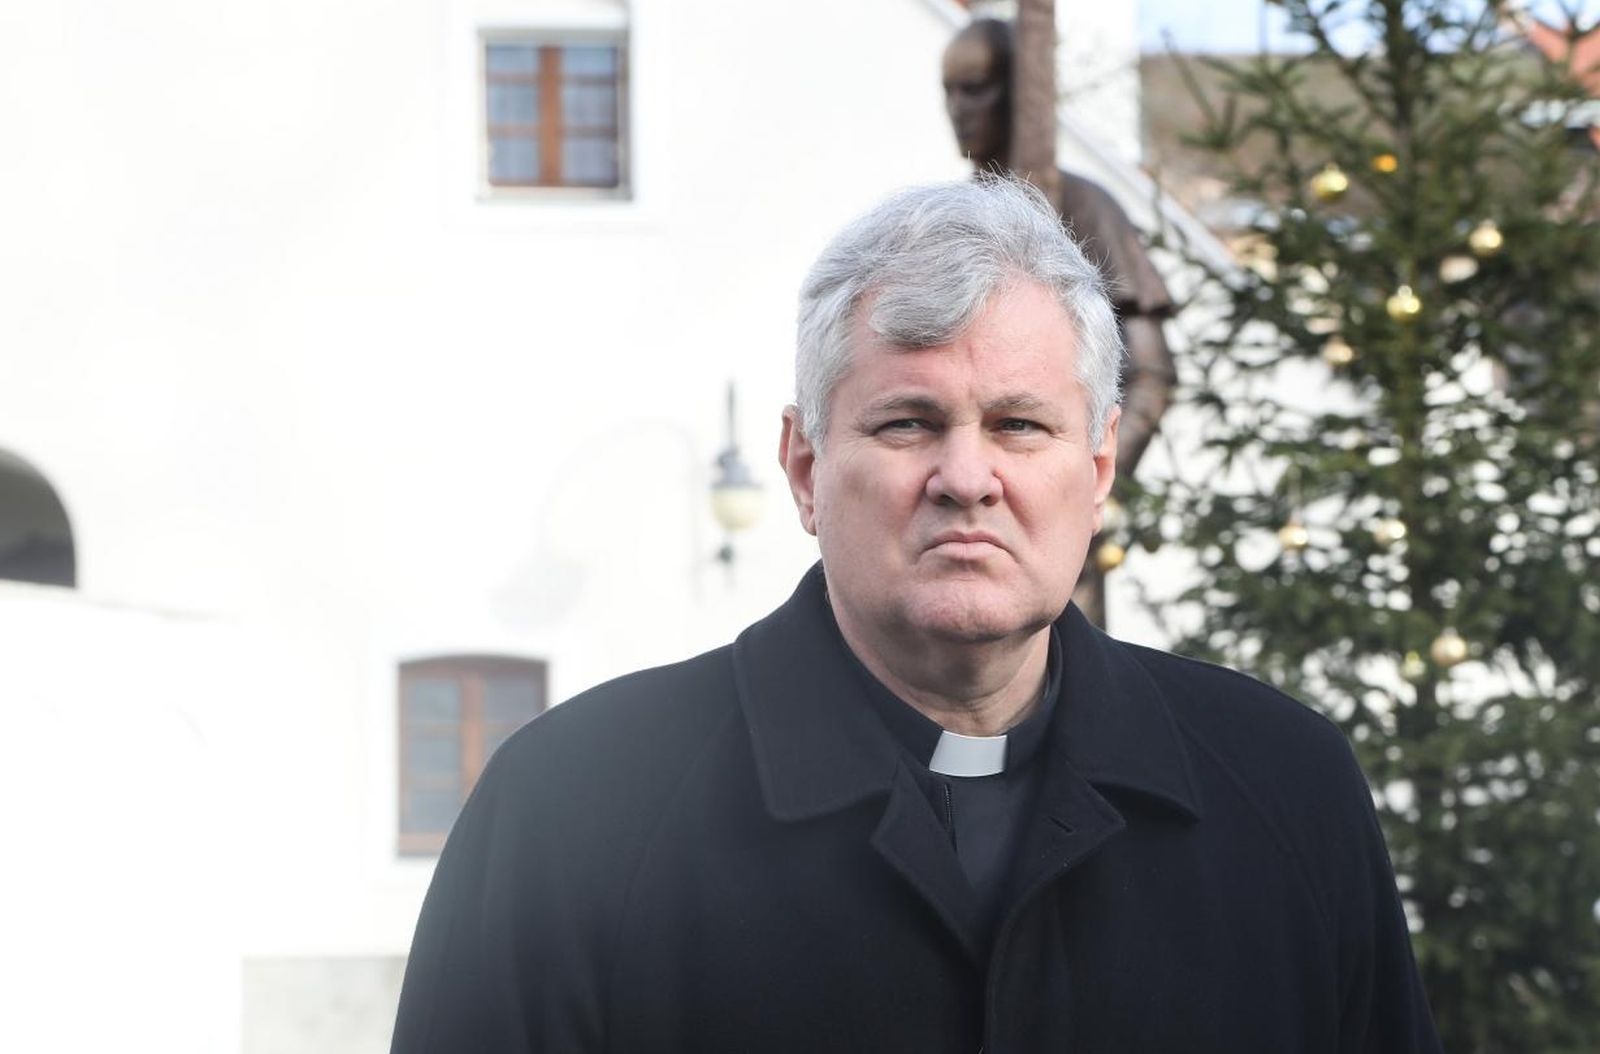 07.01.2021., Sisak - Sisacki biskup Vlado Kosic dao je izjavu nakon obilaska katedrale. Photo: Edina Zuko/PIXSELL